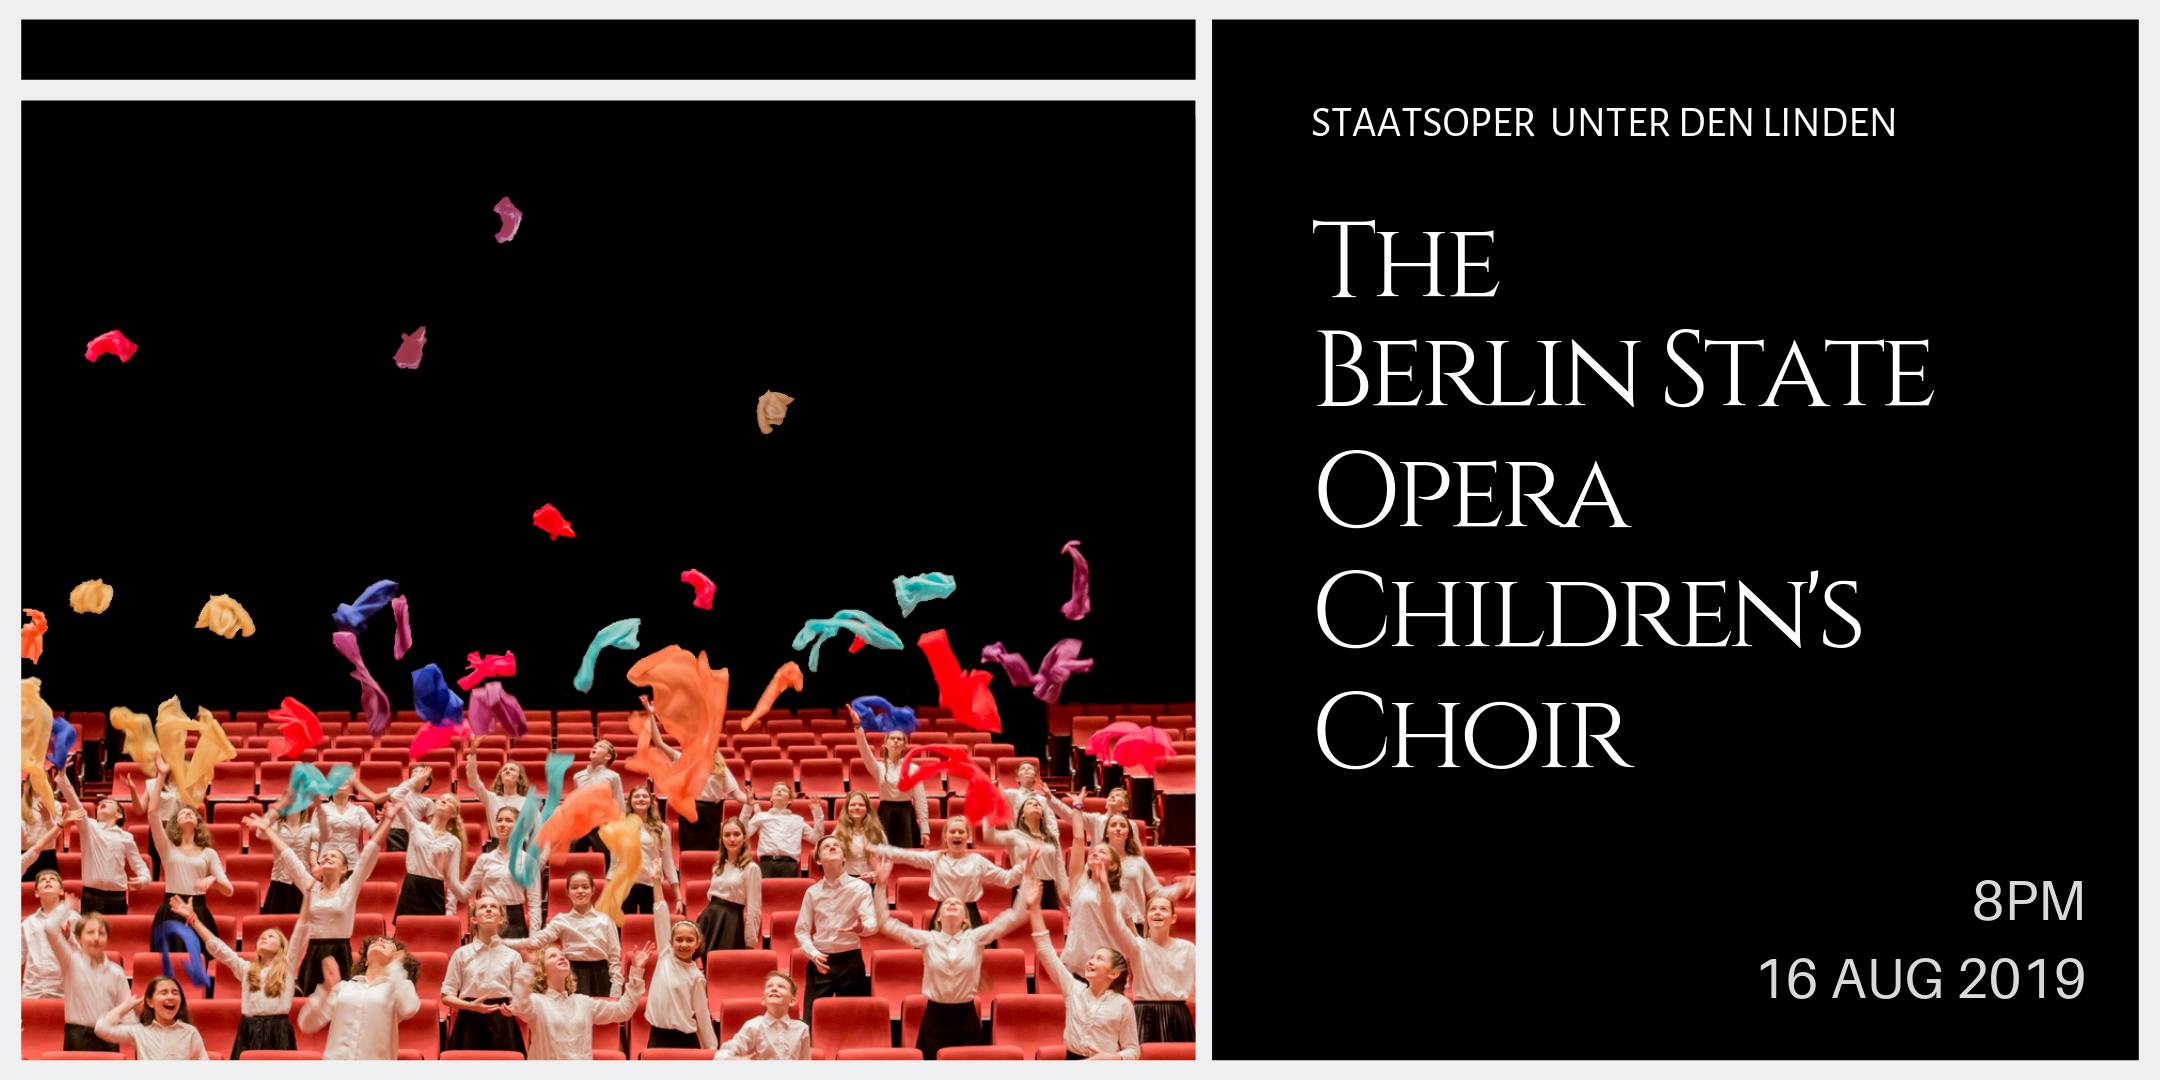 Berlin State Opera Children's Choir in Concert